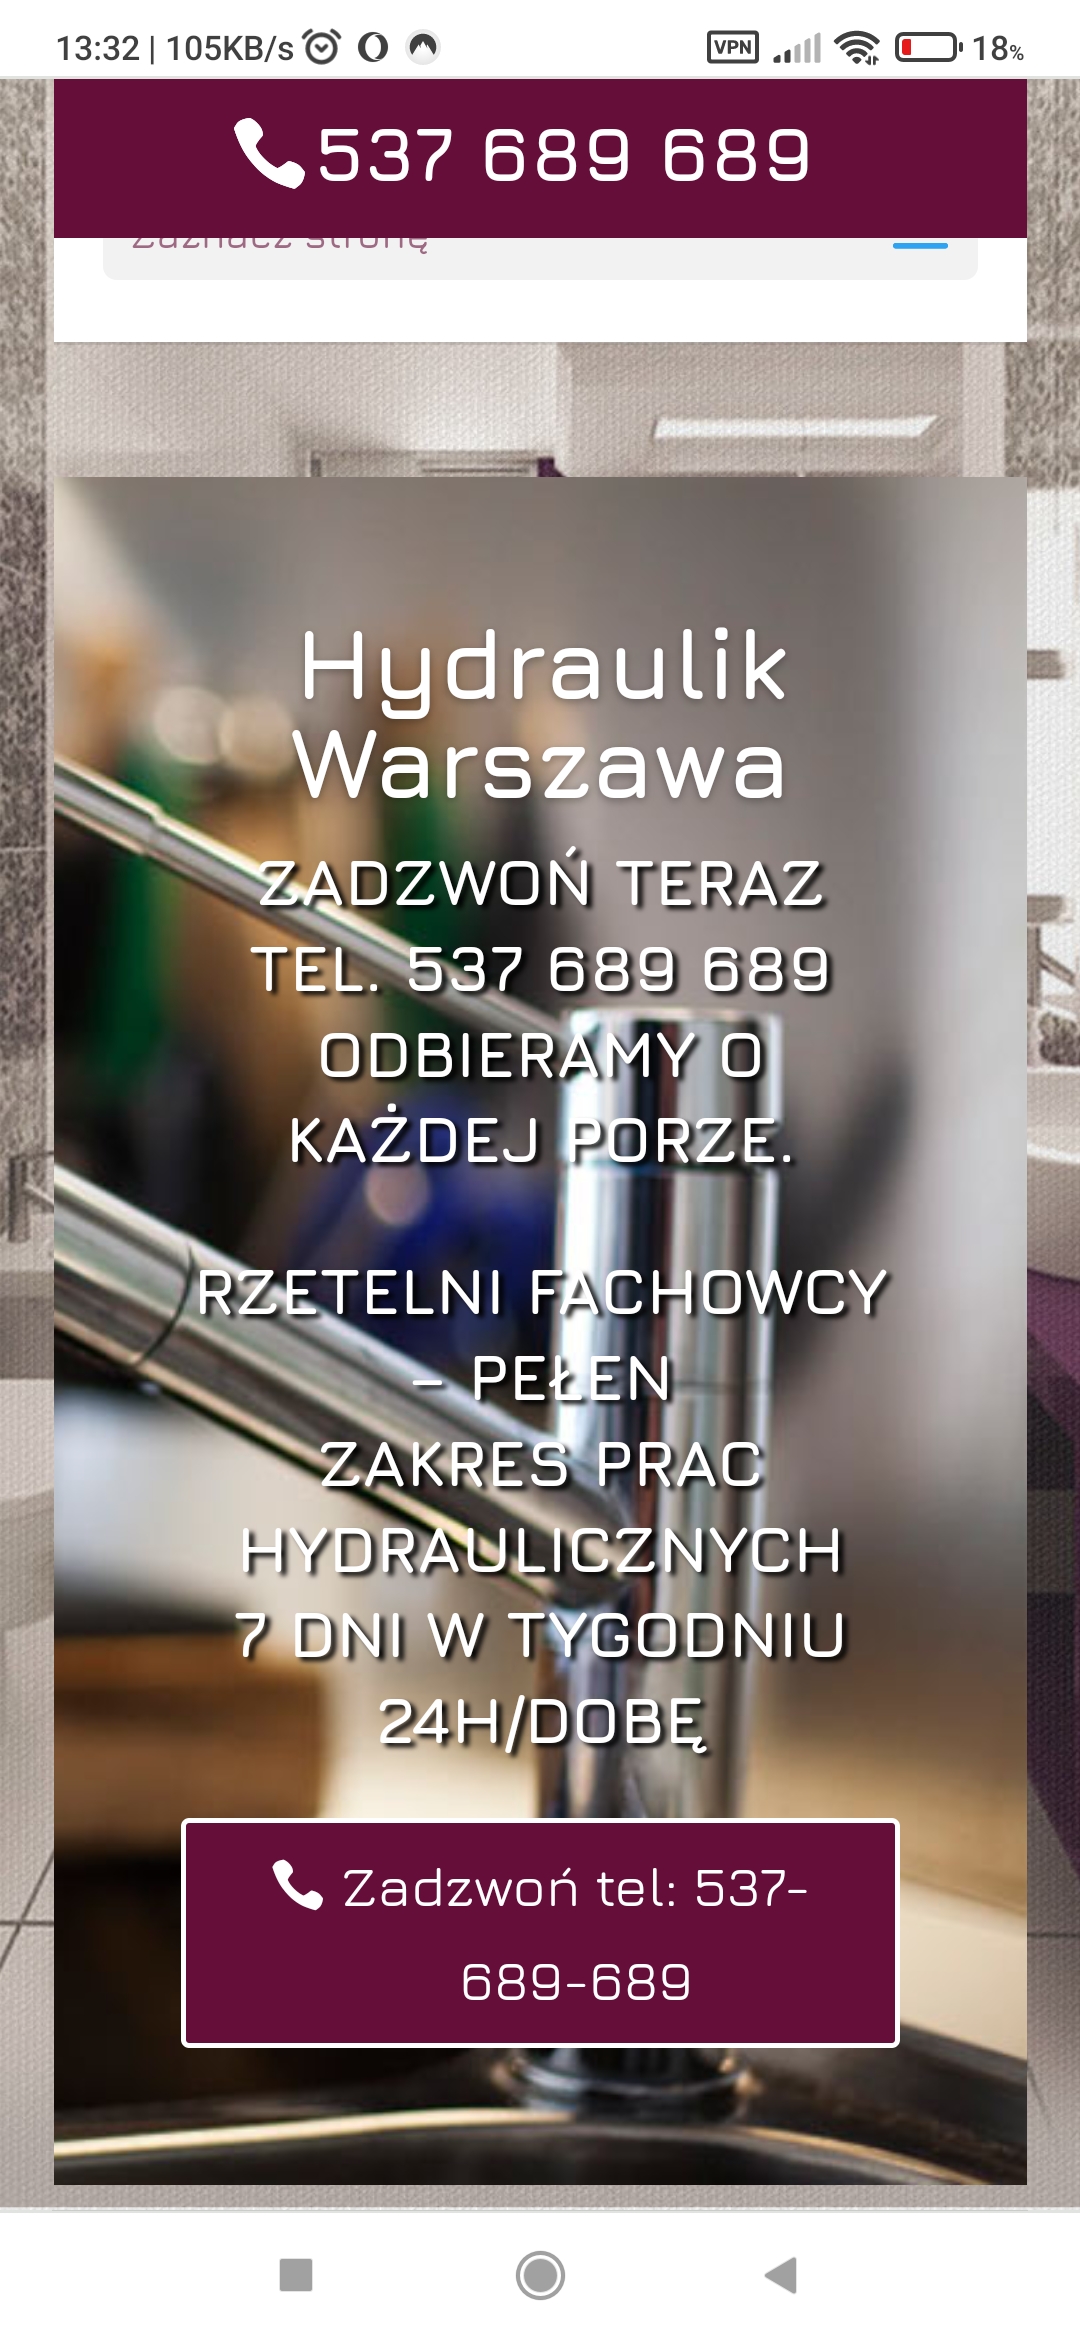 Hydraulik Warszawa 